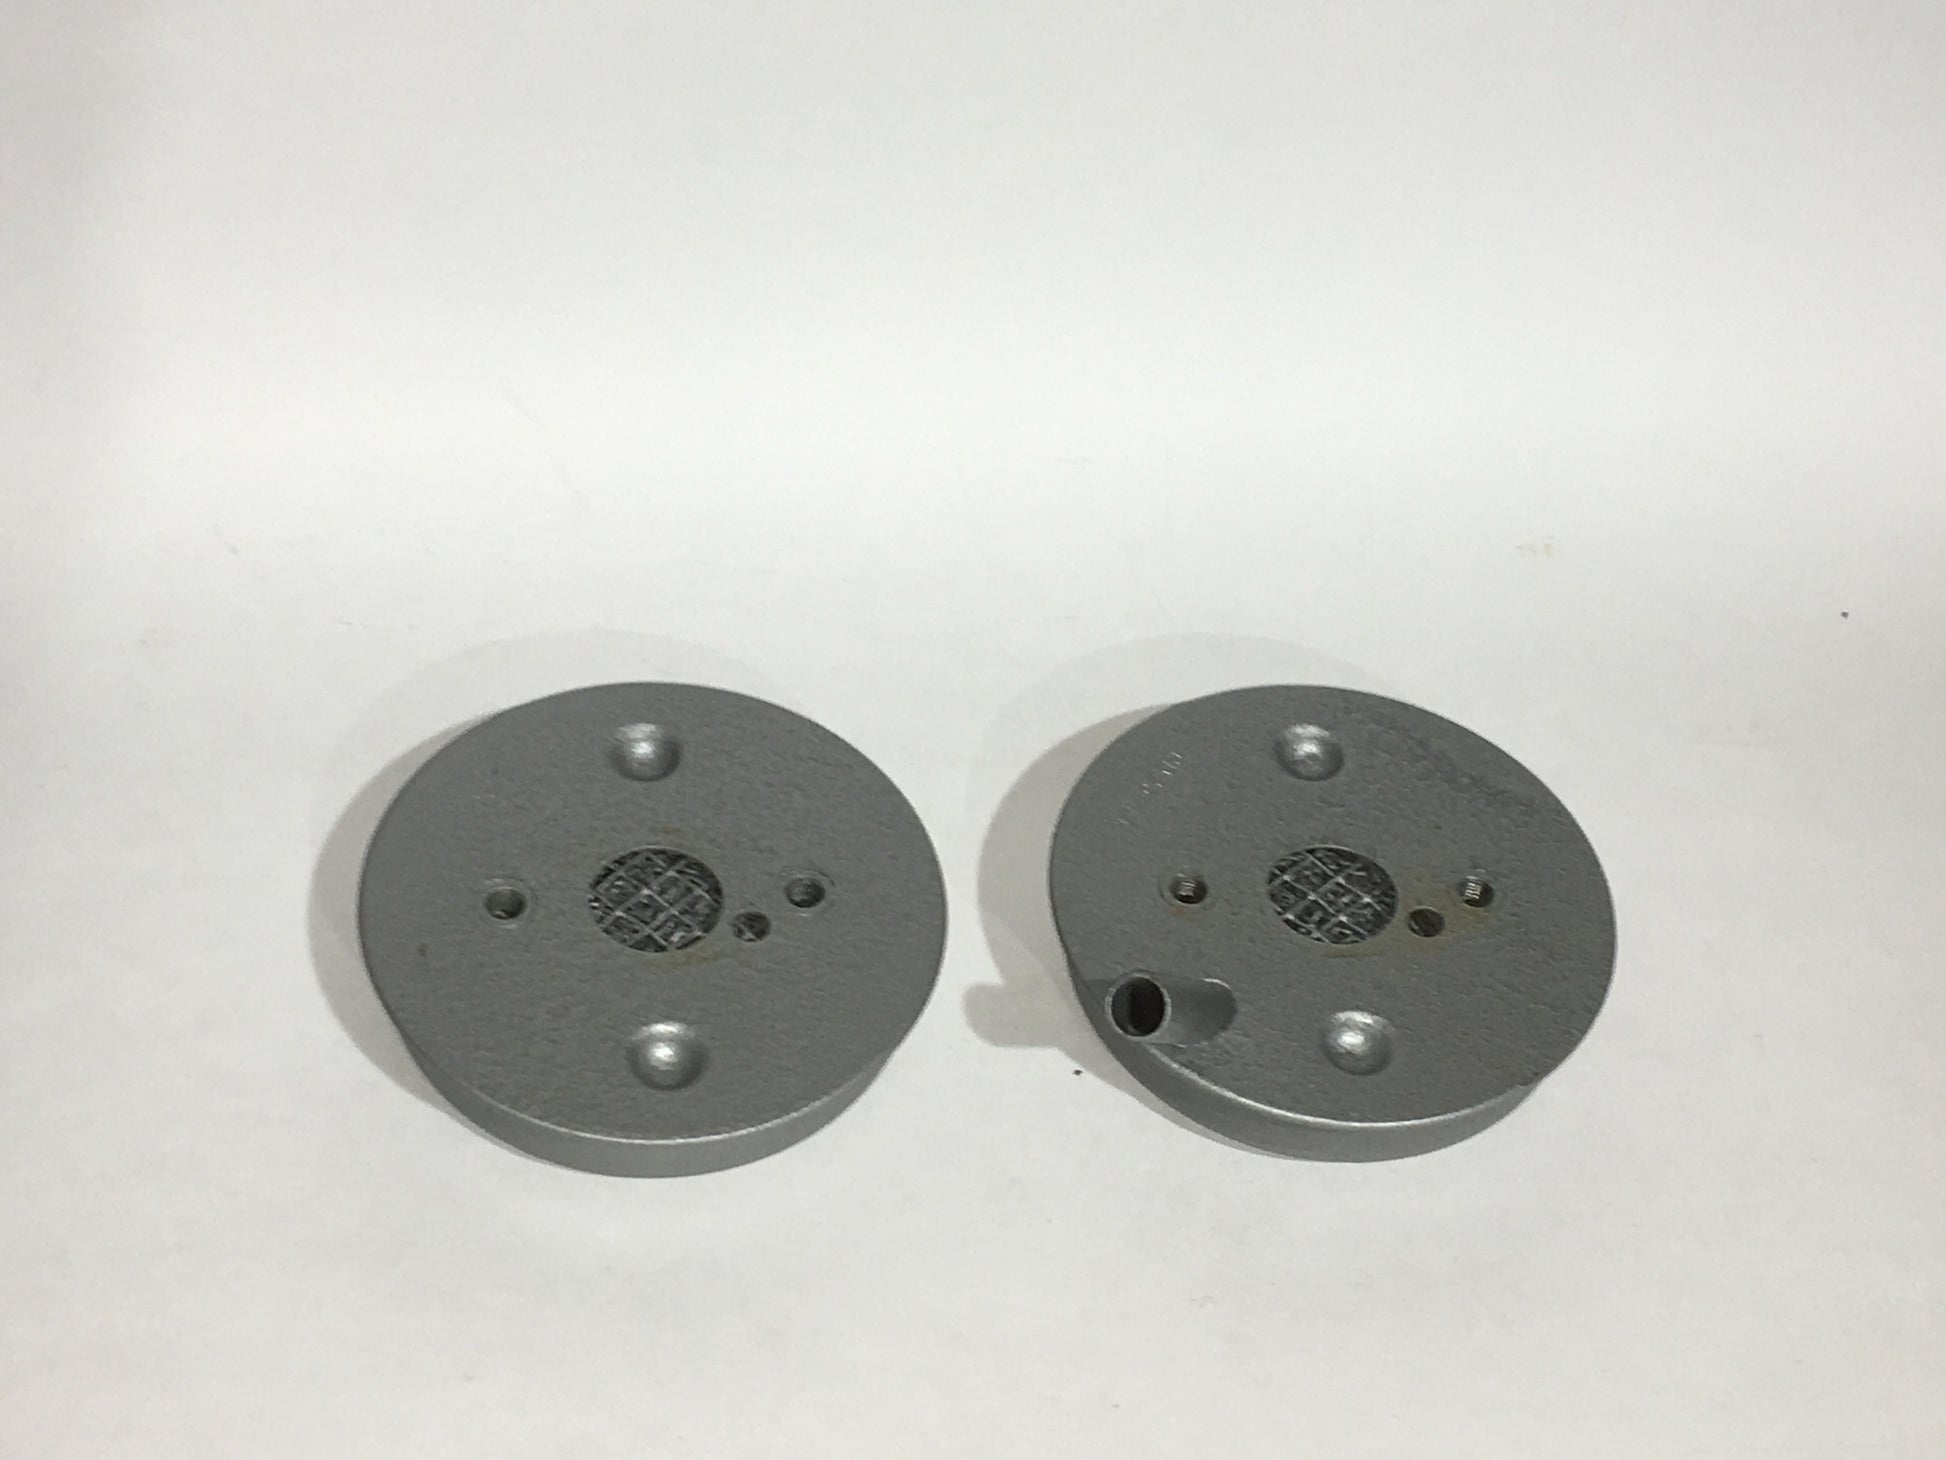 Austin Healey Sprite Reproduction Bugeye Air Filters (pair) for H1 Carburetors Mechanical - Bugeye